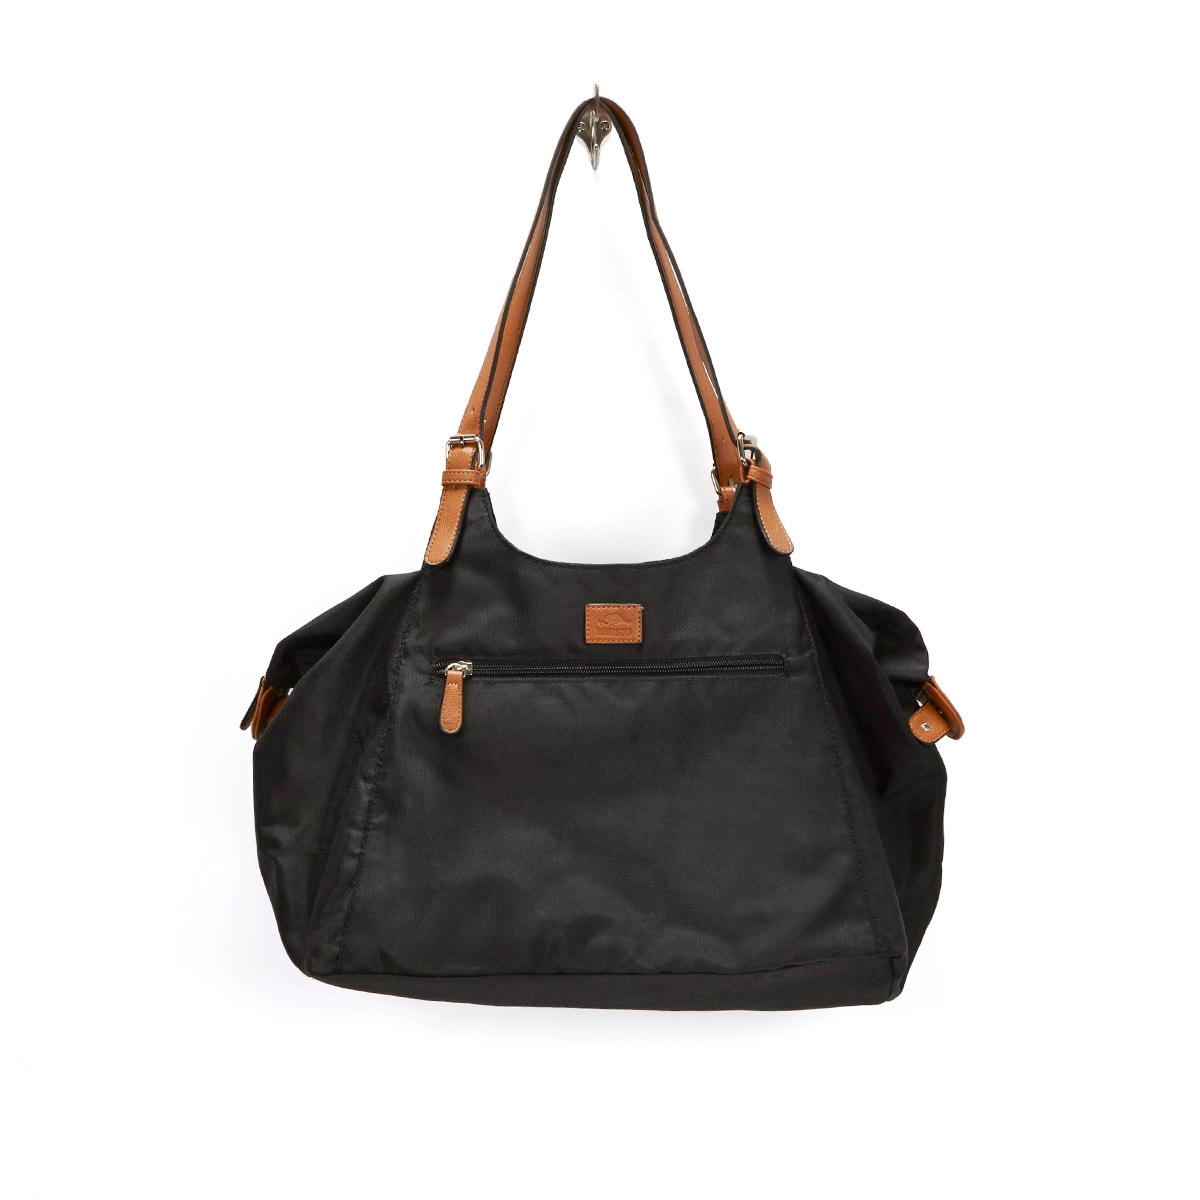 Women's R4700 black large tote bag